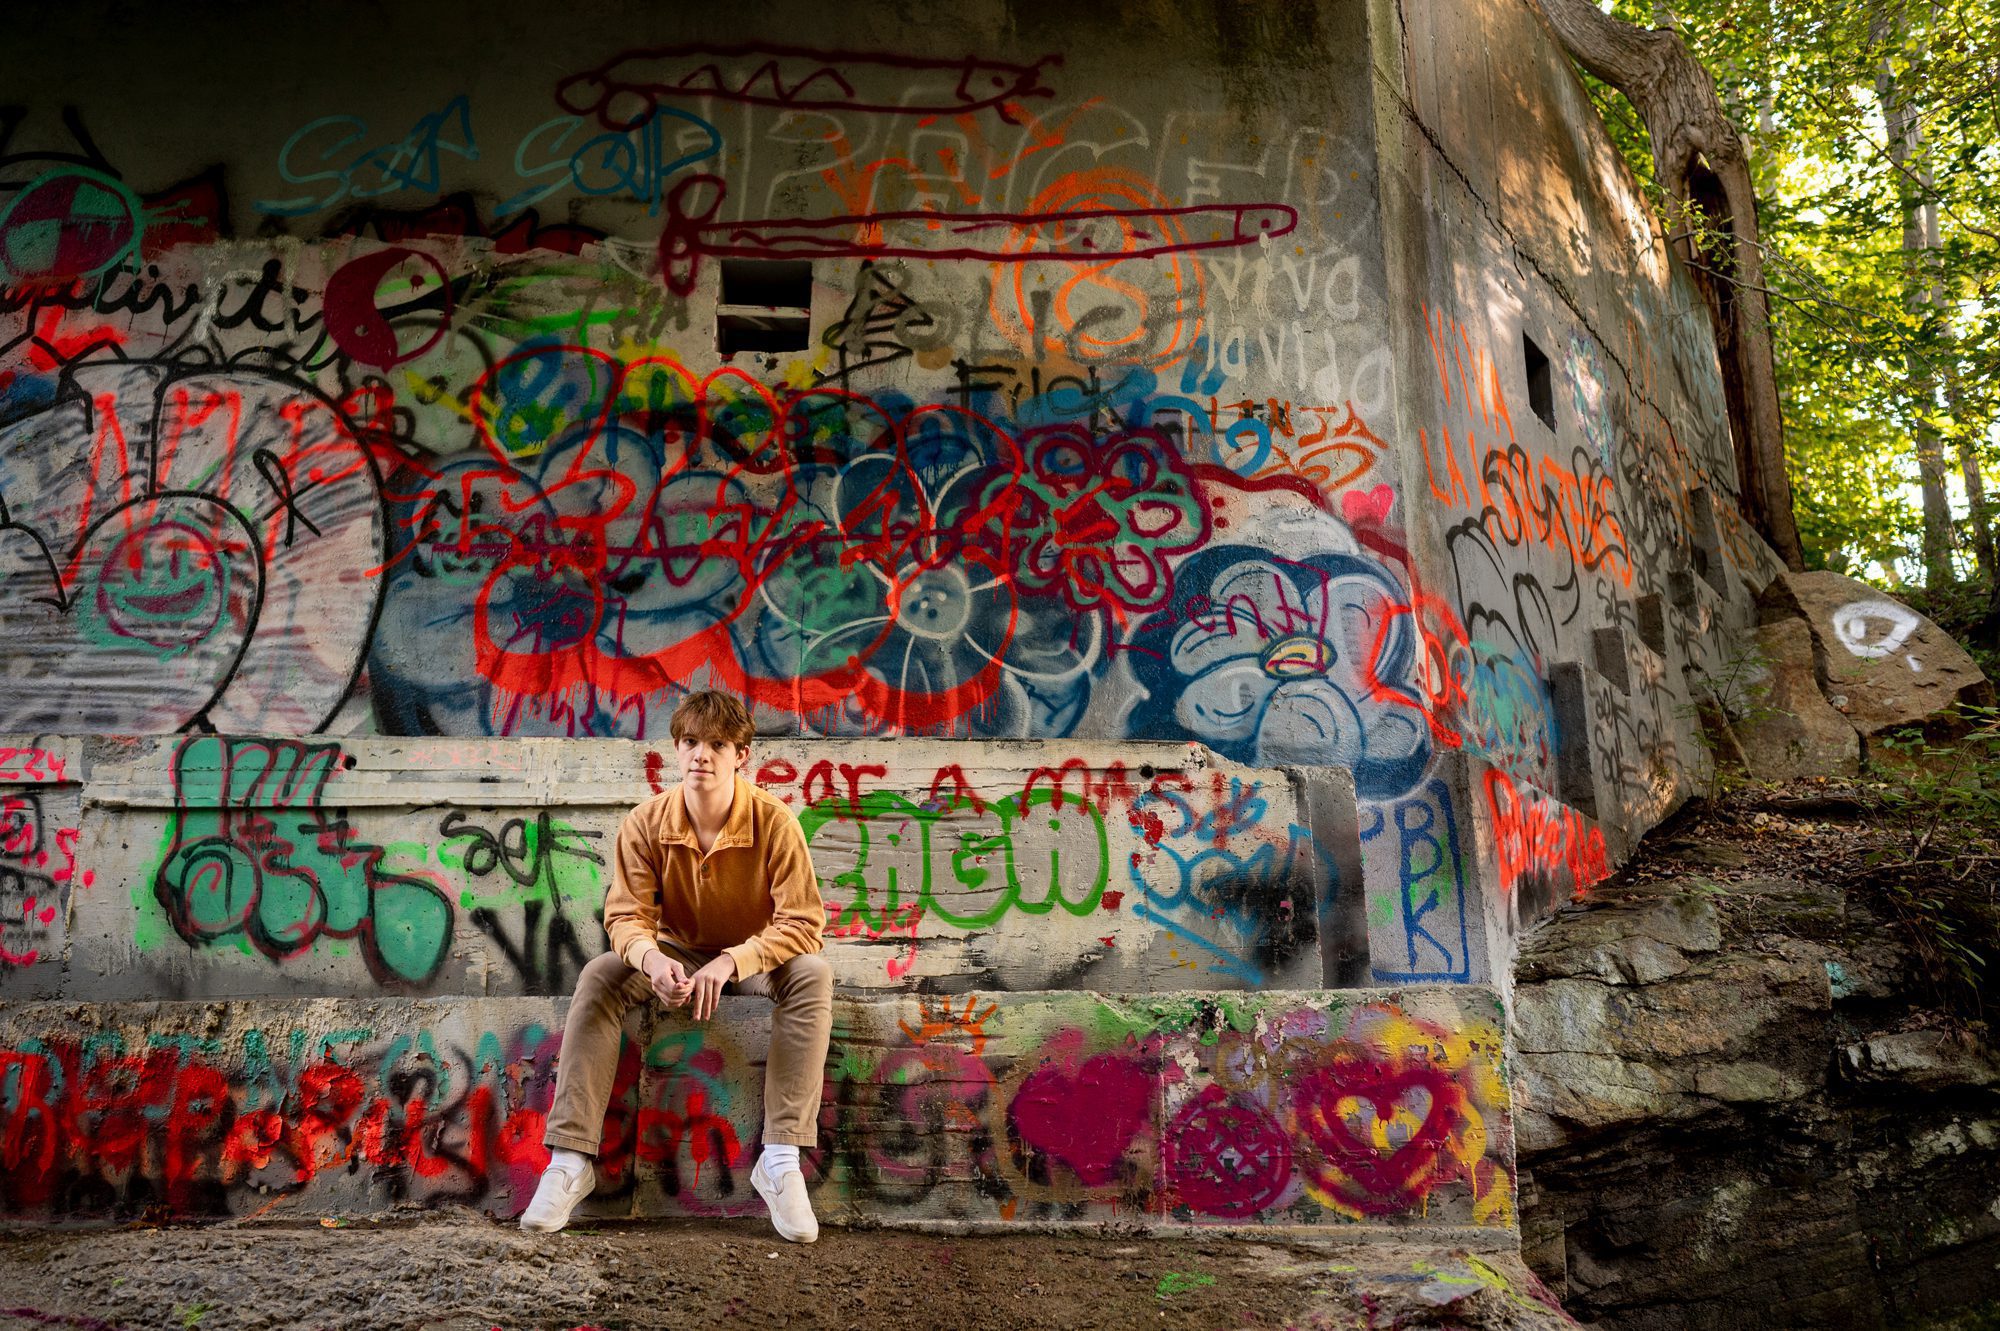 Teenager posing with graffiti